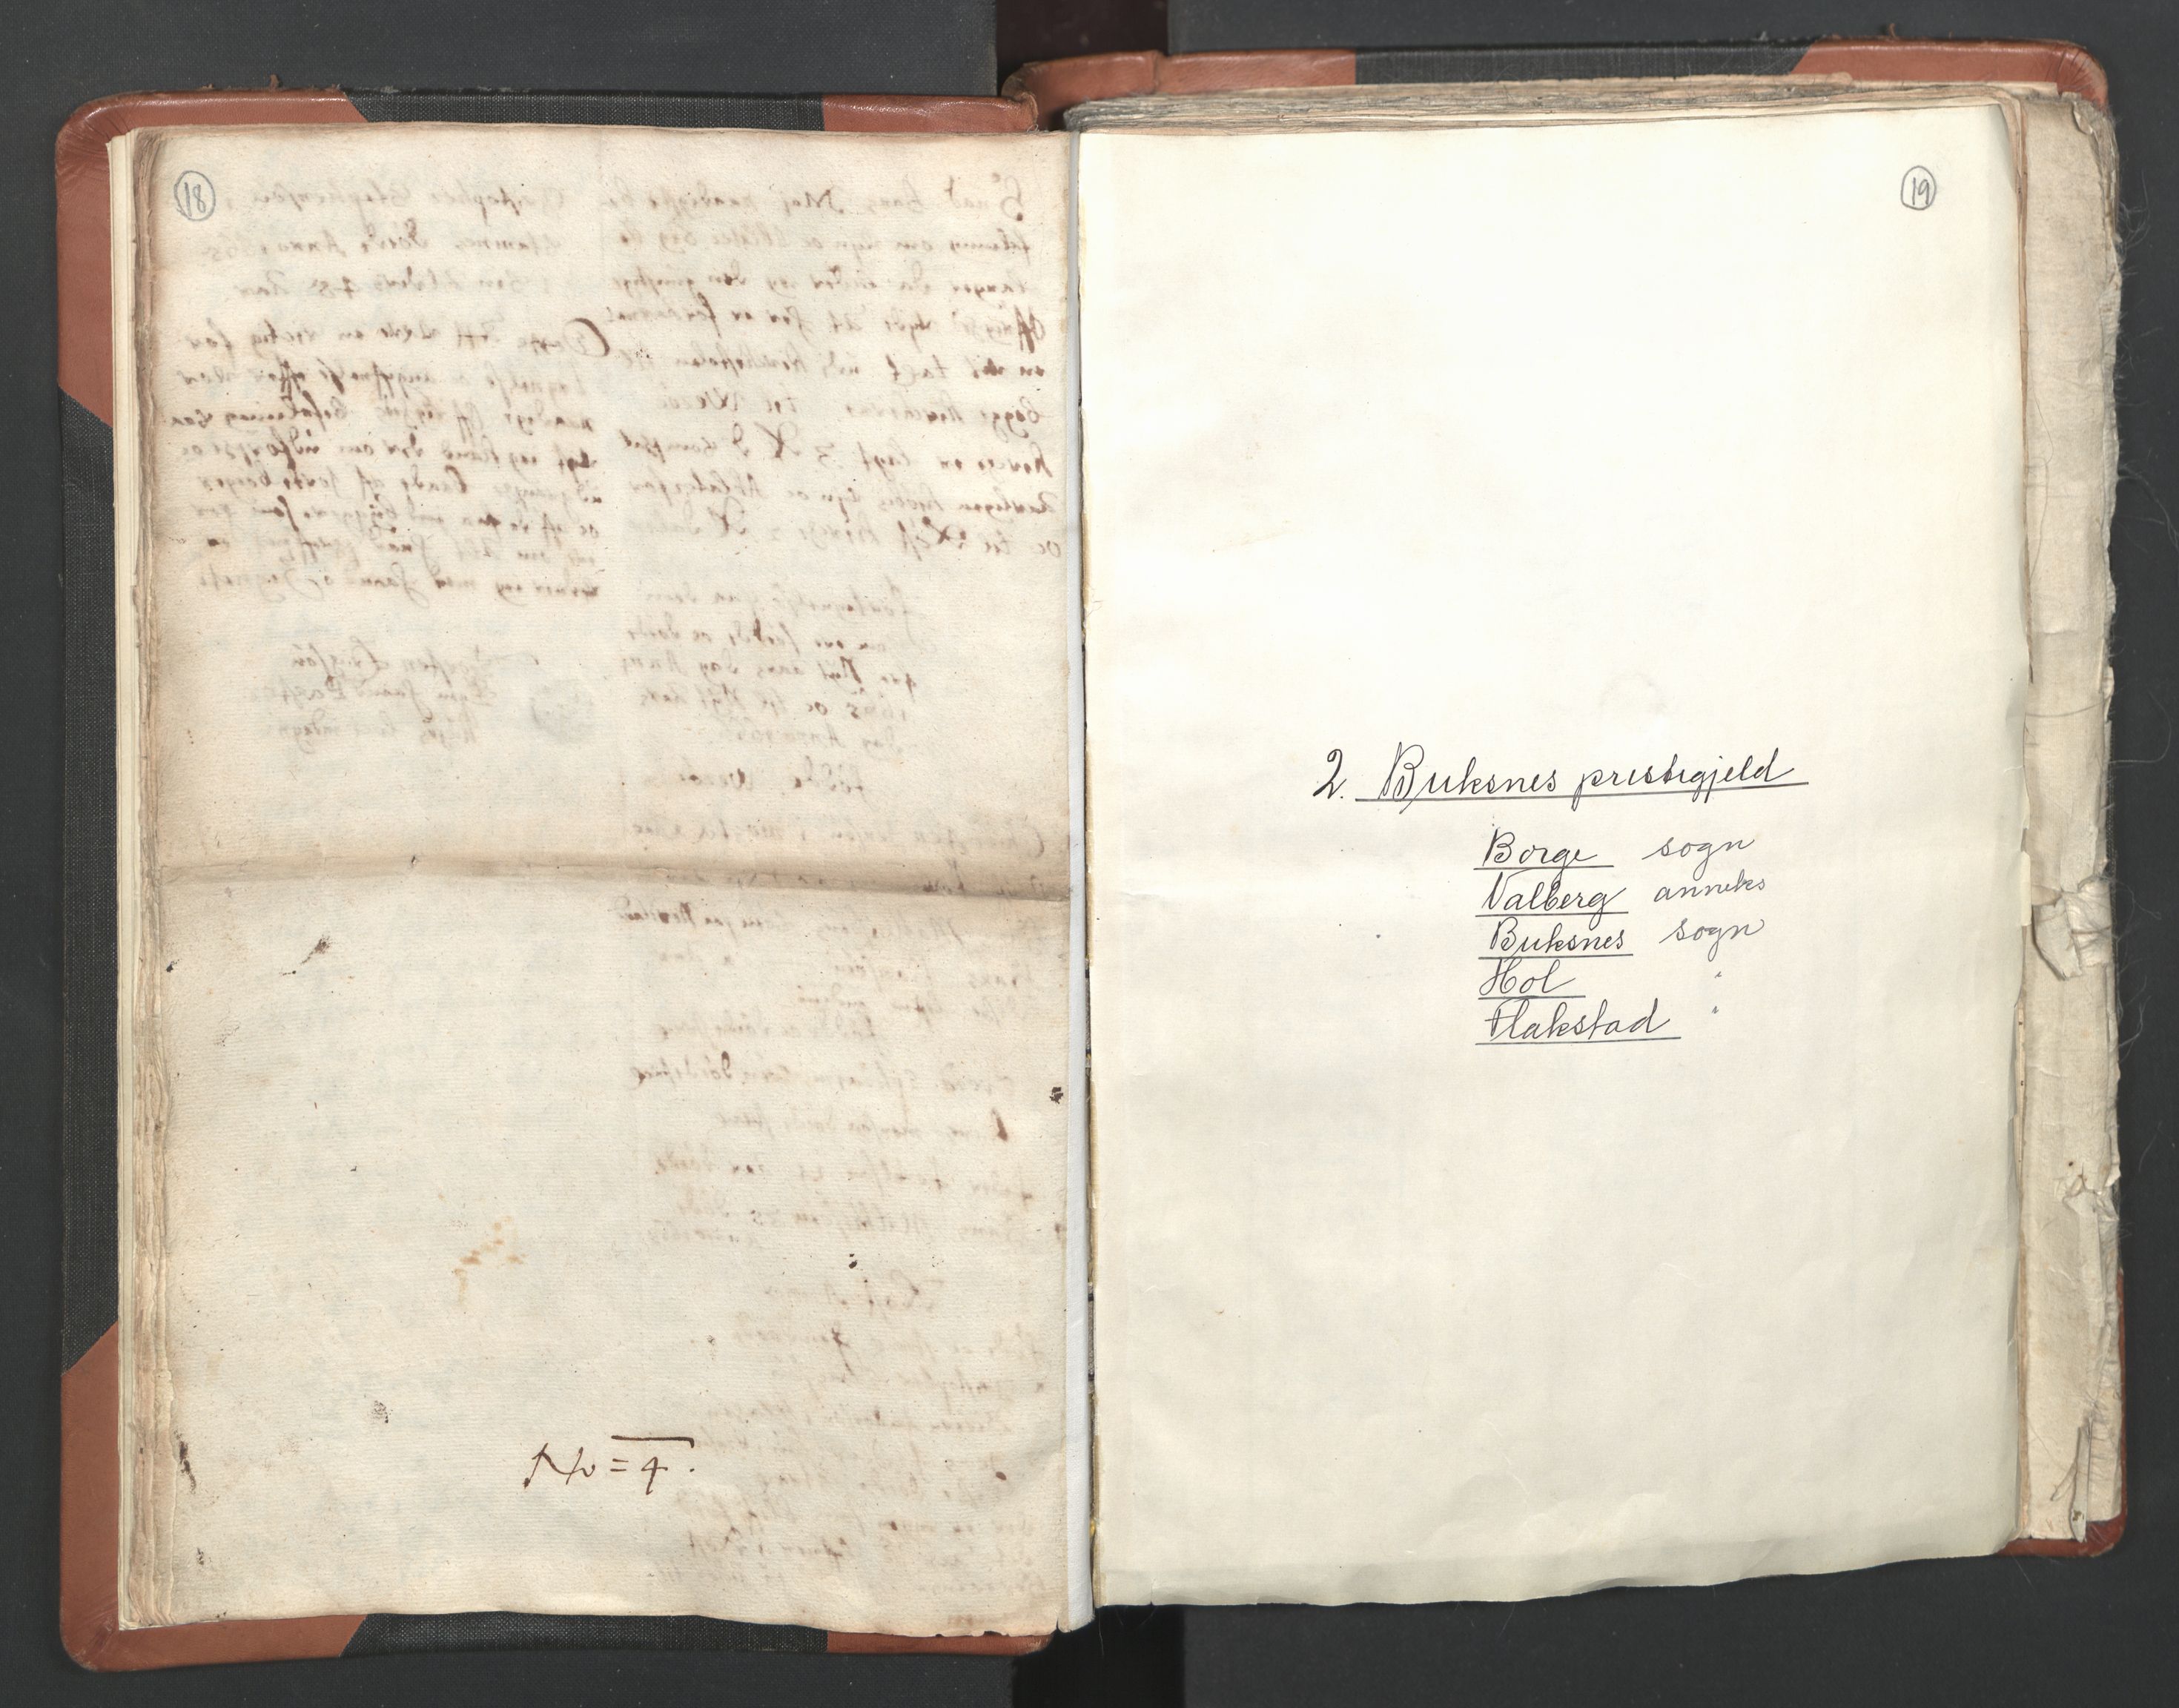 RA, Vicar's Census 1664-1666, no. 36: Lofoten and Vesterålen deanery, Senja deanery and Troms deanery, 1664-1666, p. 18-19